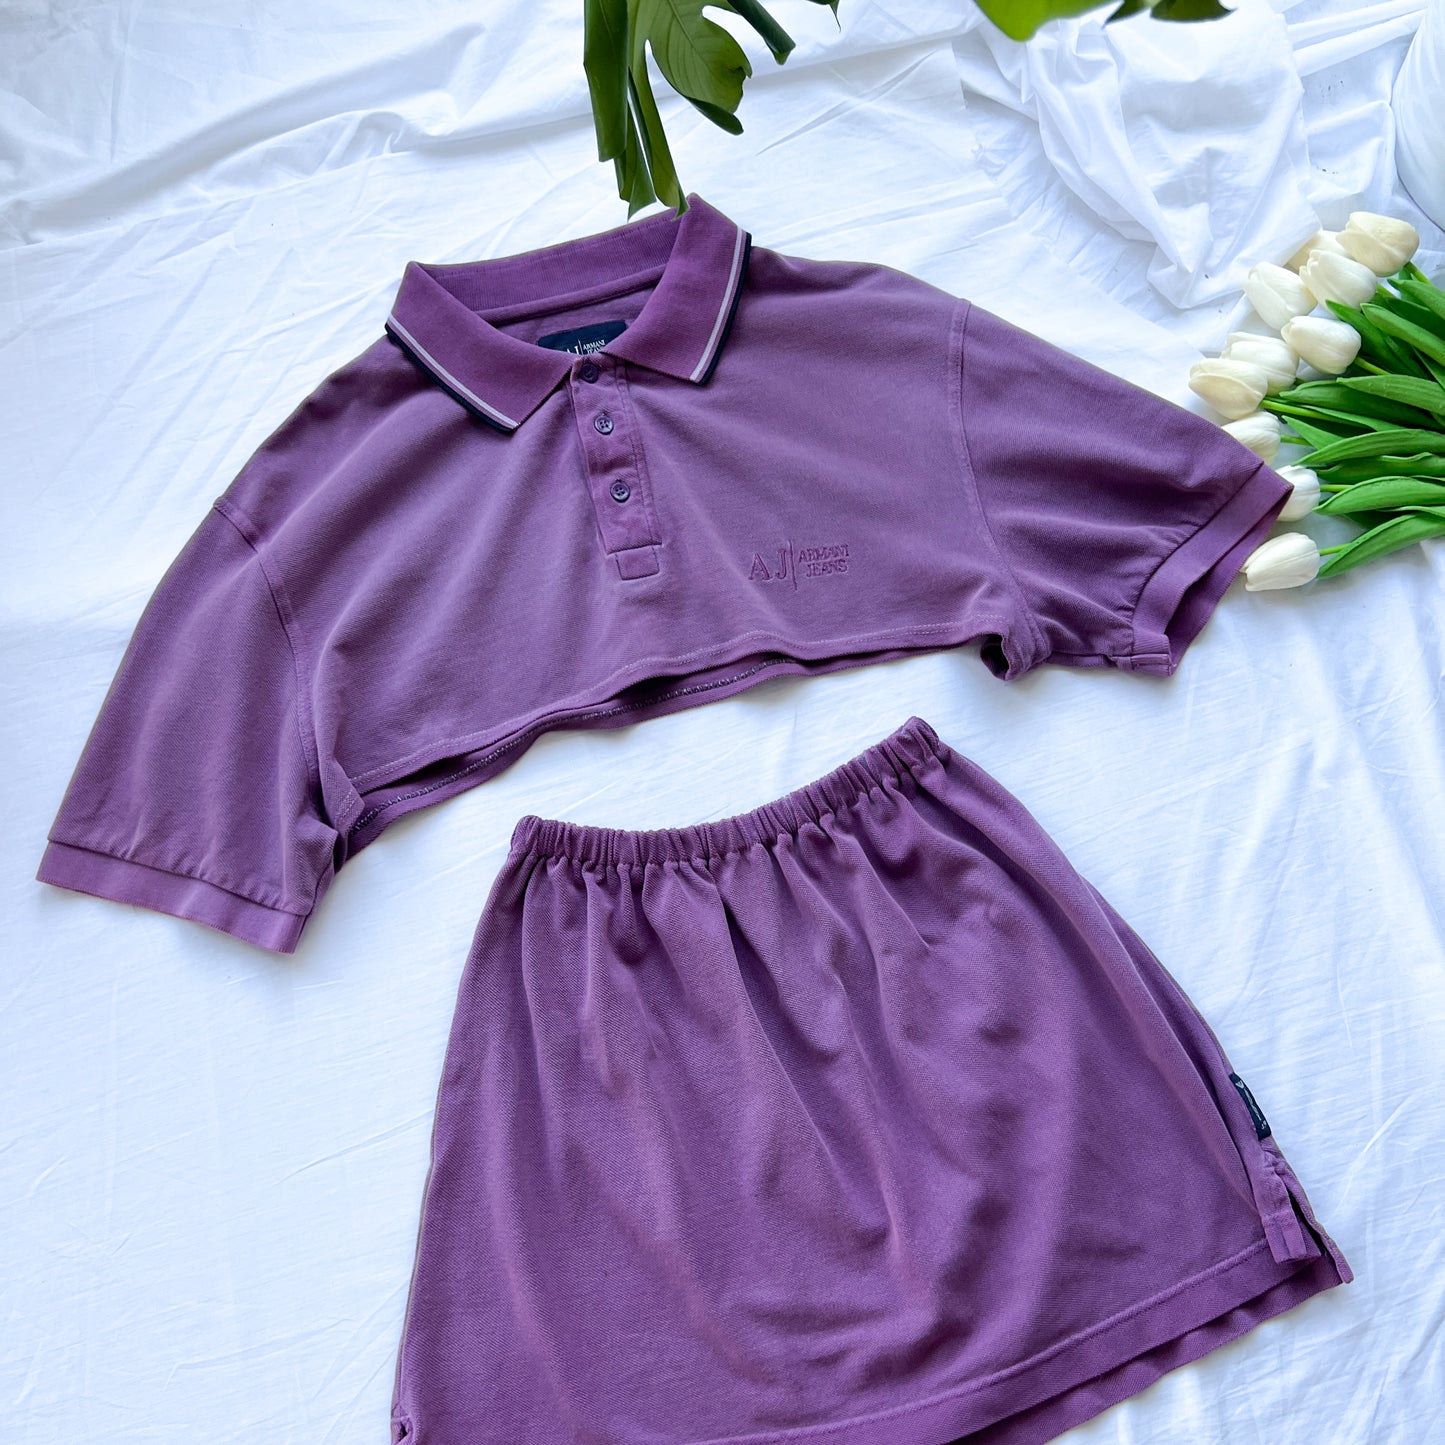 (XS) Armani Jeans reworked set vintage lilac